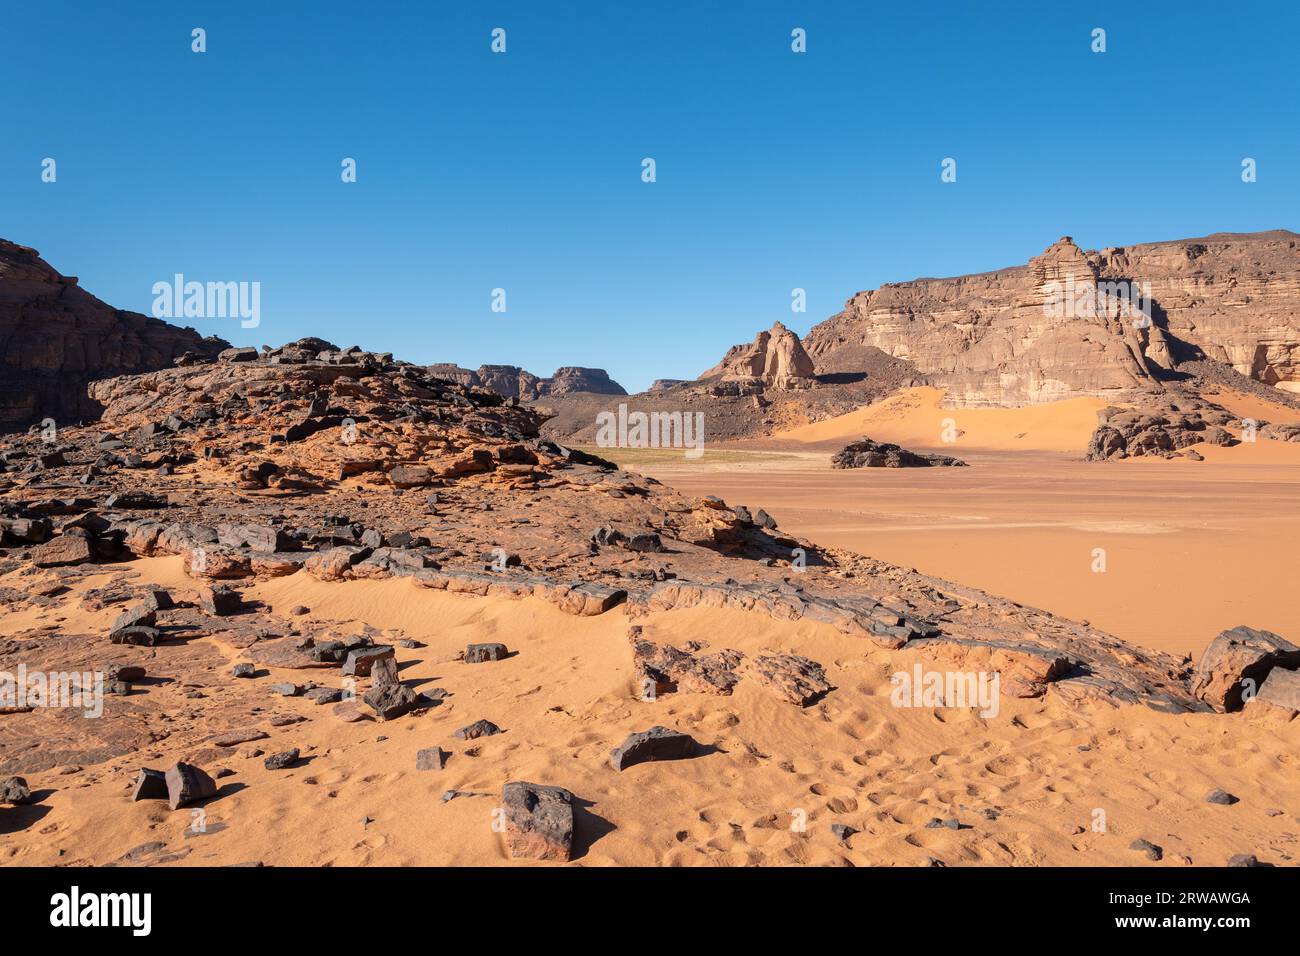 Dry valley in the Sahara desert Stock Photo